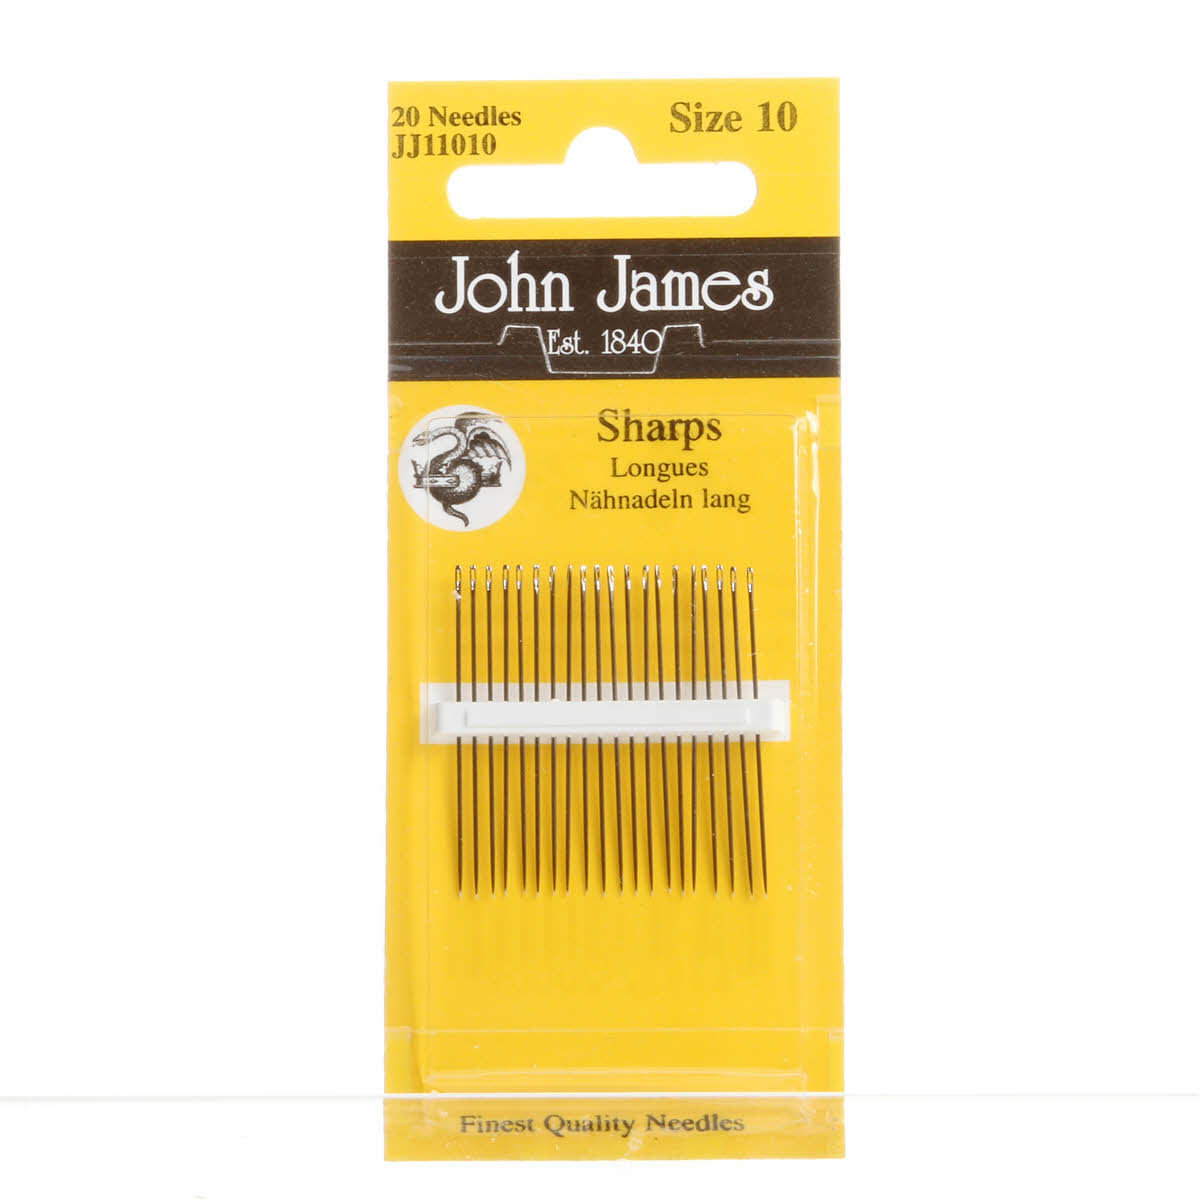 John James Sharps Needle Size 10